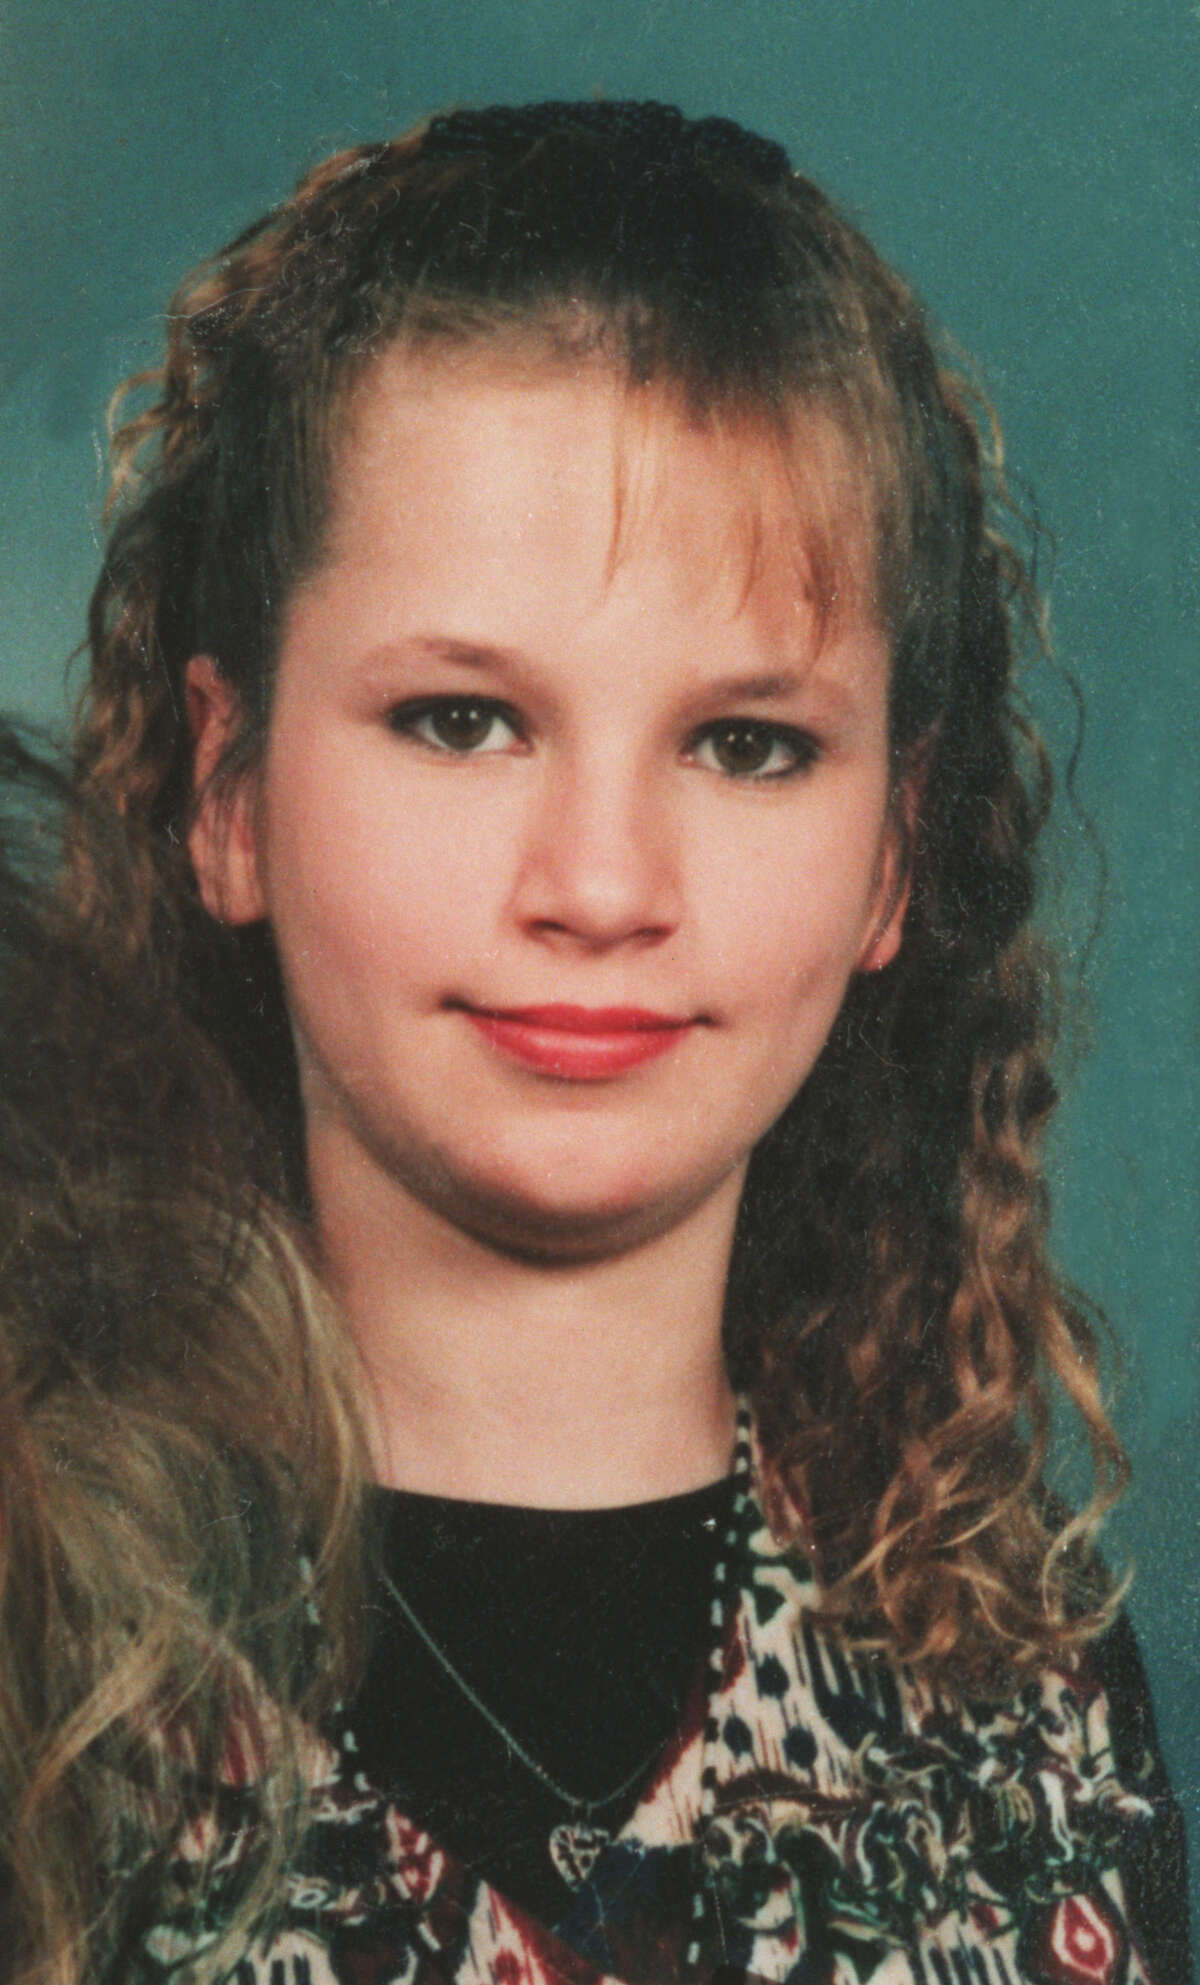 Krystal Jean Baker, 13, was last seen walking from her grandmother's house in Texas City in 1996.